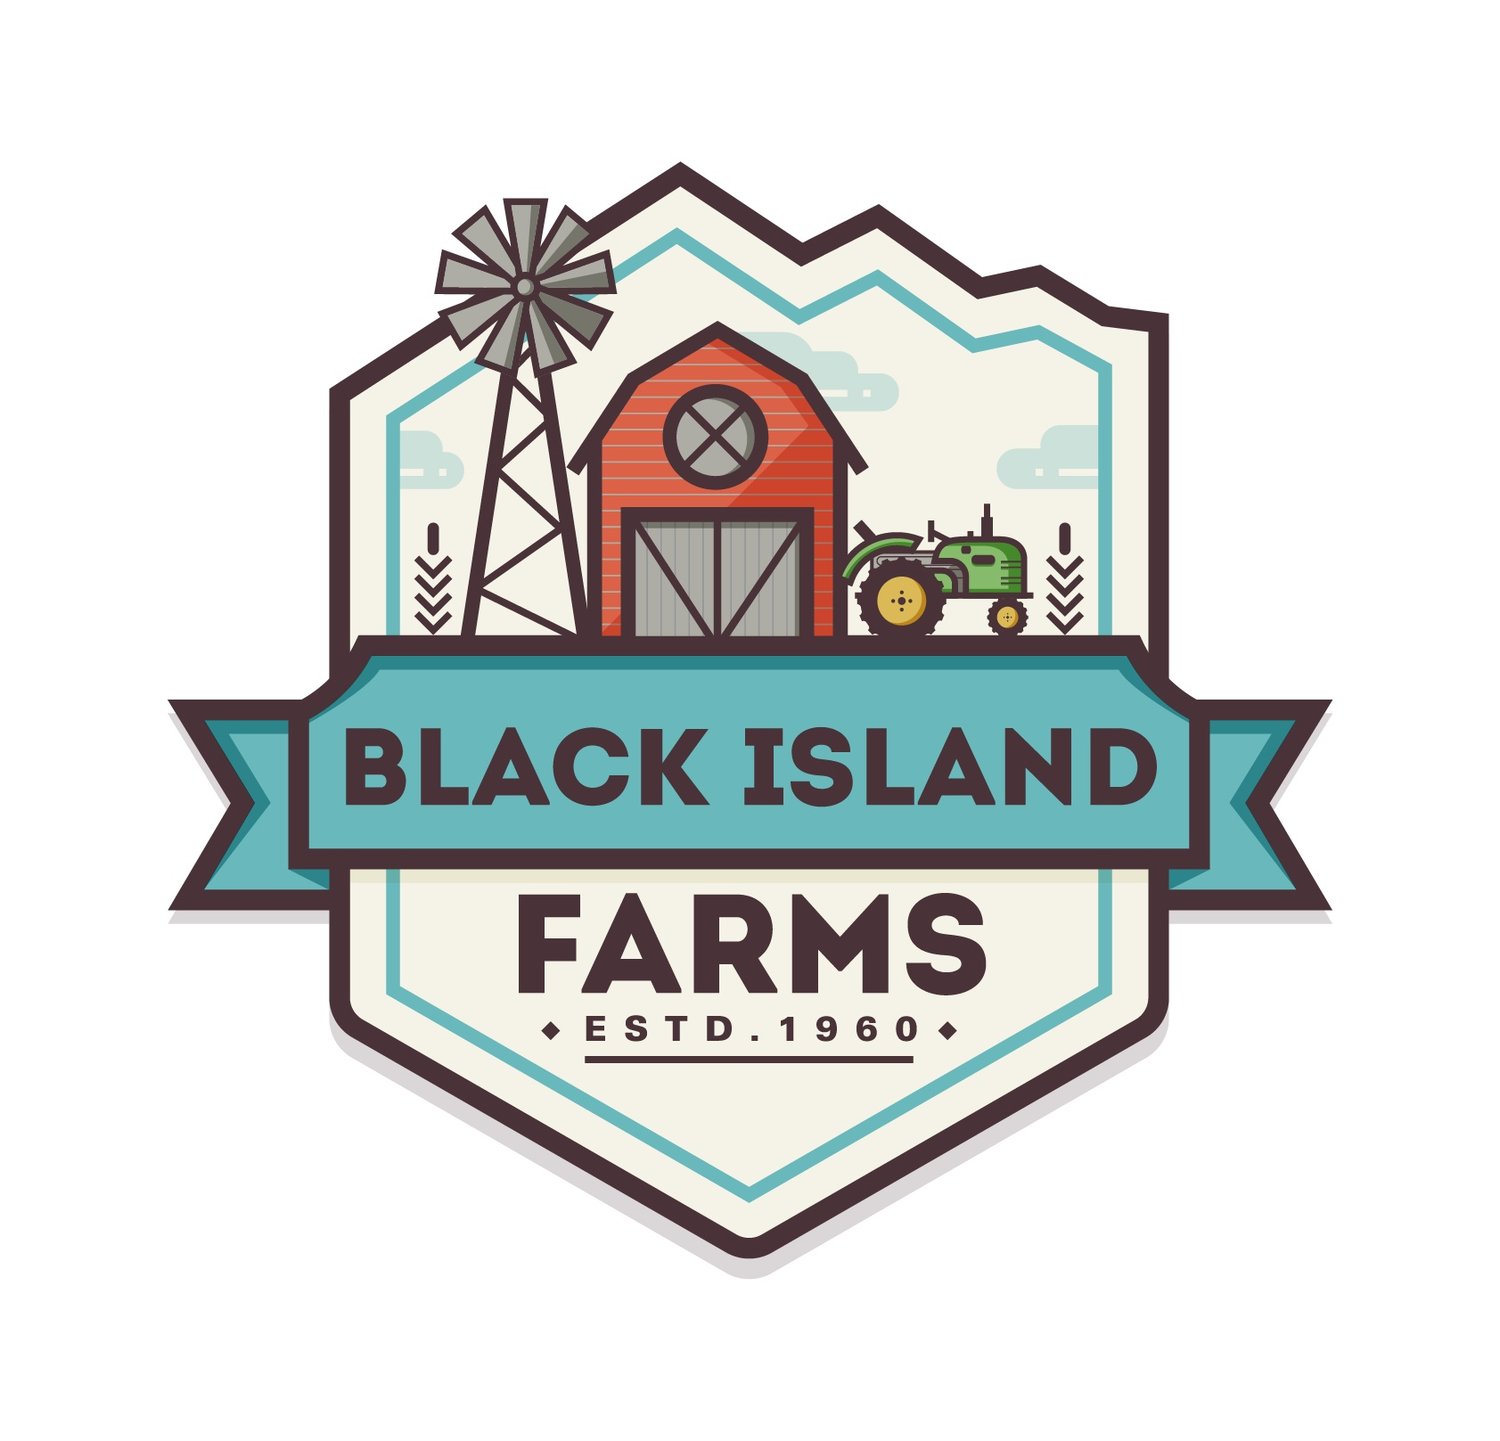 Black Island Farms